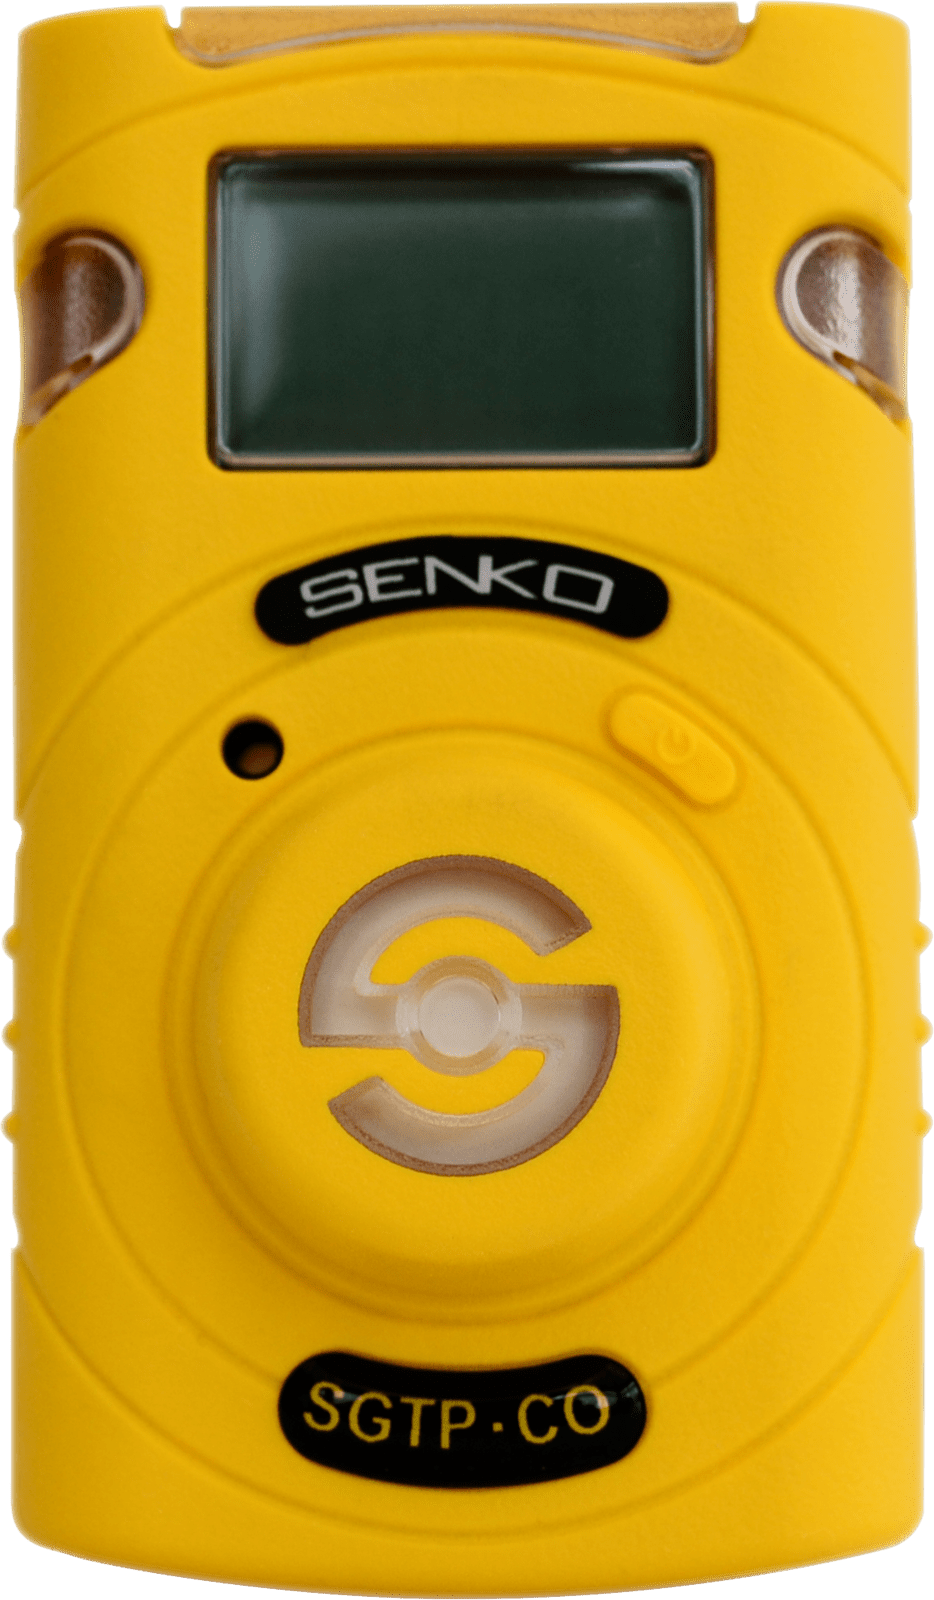 Products | Senko